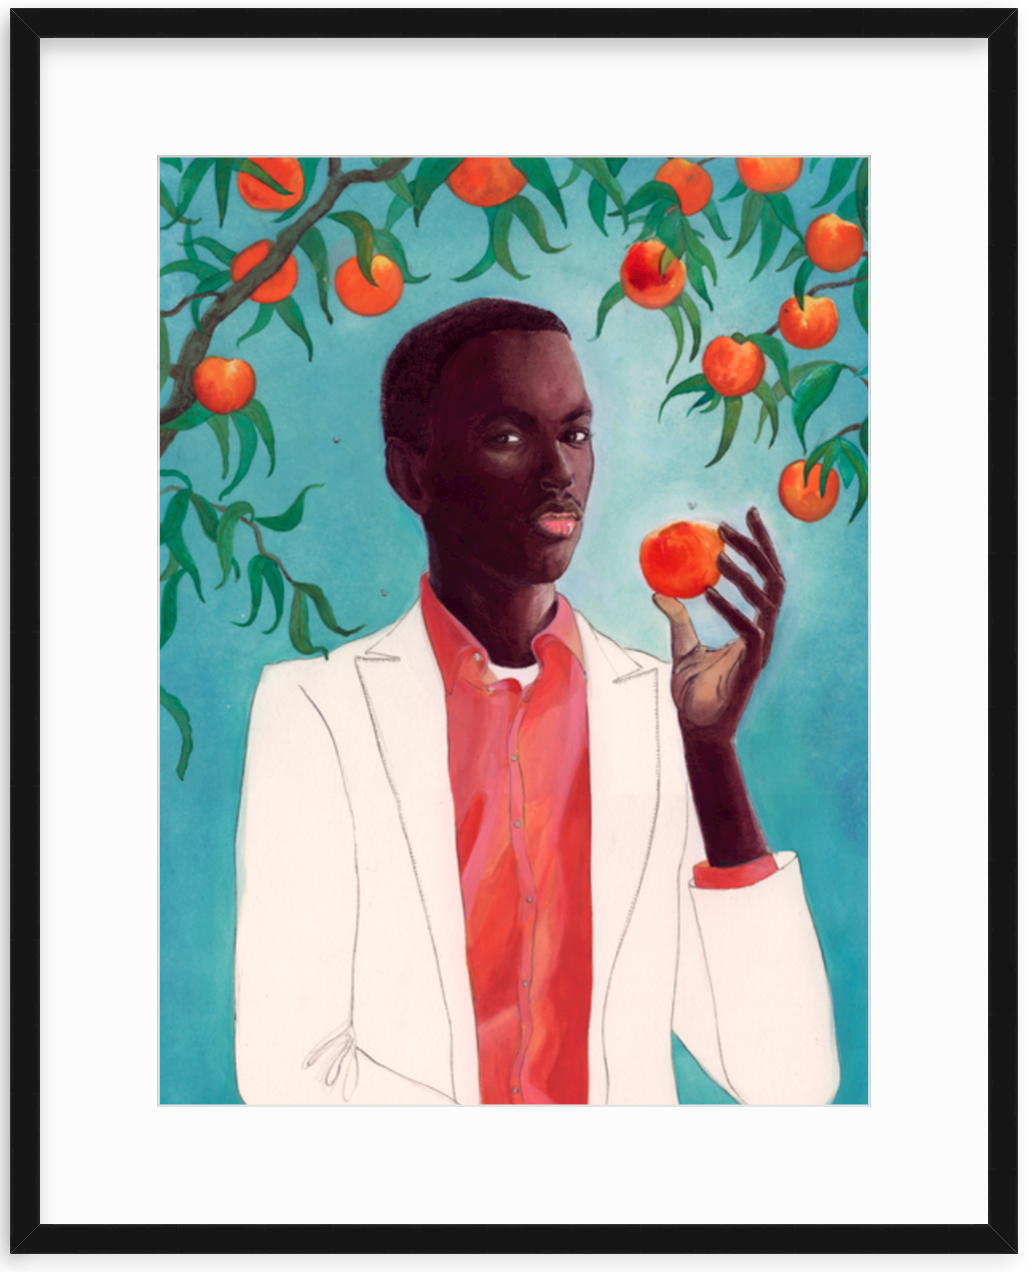 Peach framed illustration by artist Shadra Strickland